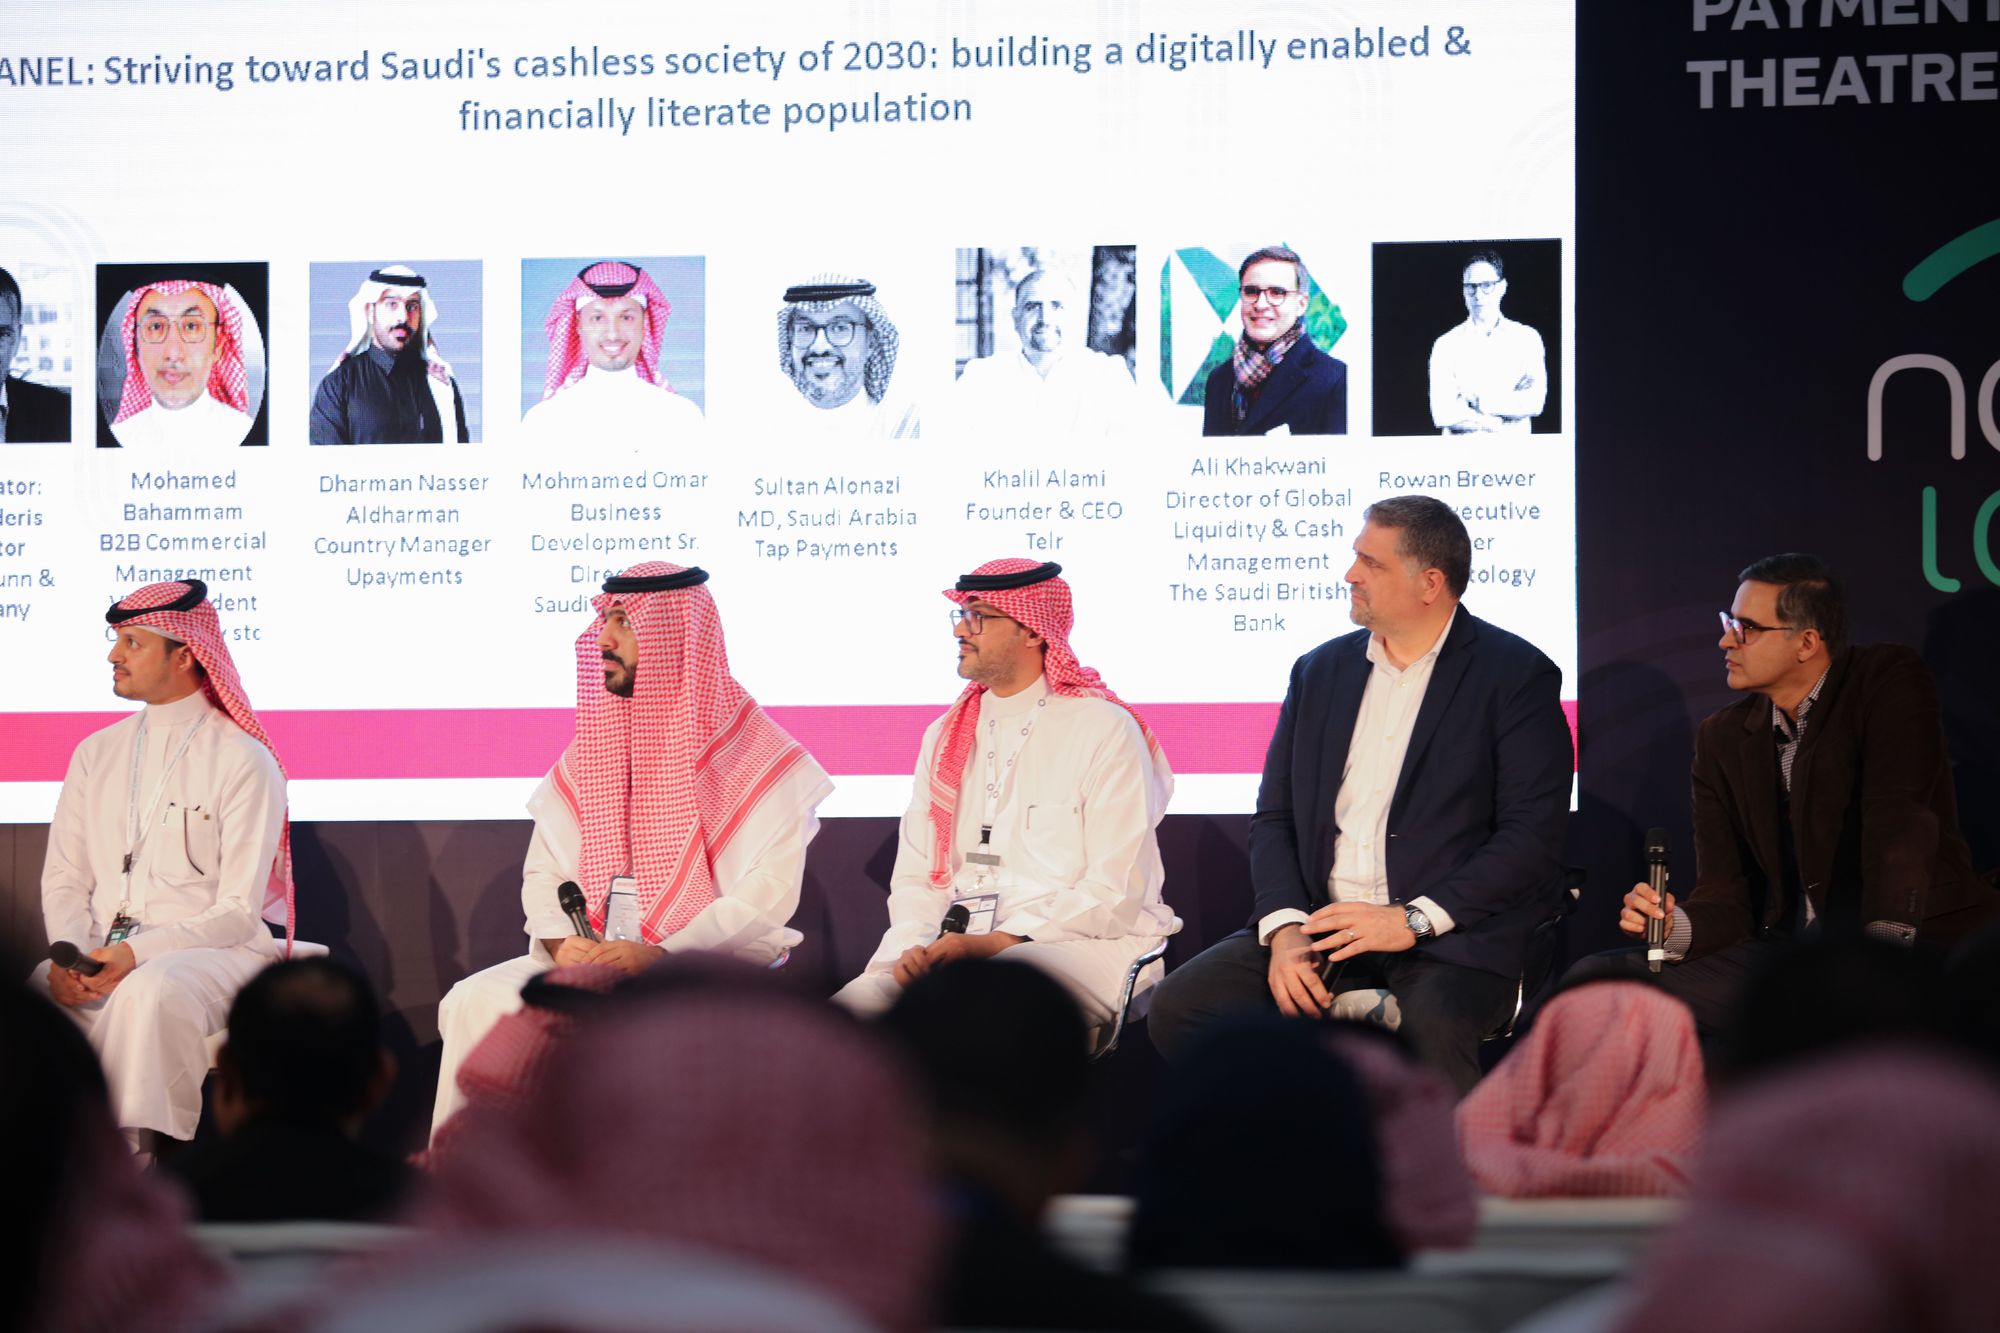 Sultan, AlOnazi, MD, Saudi at Tap Payments speaking at Seamless Saudi 2022